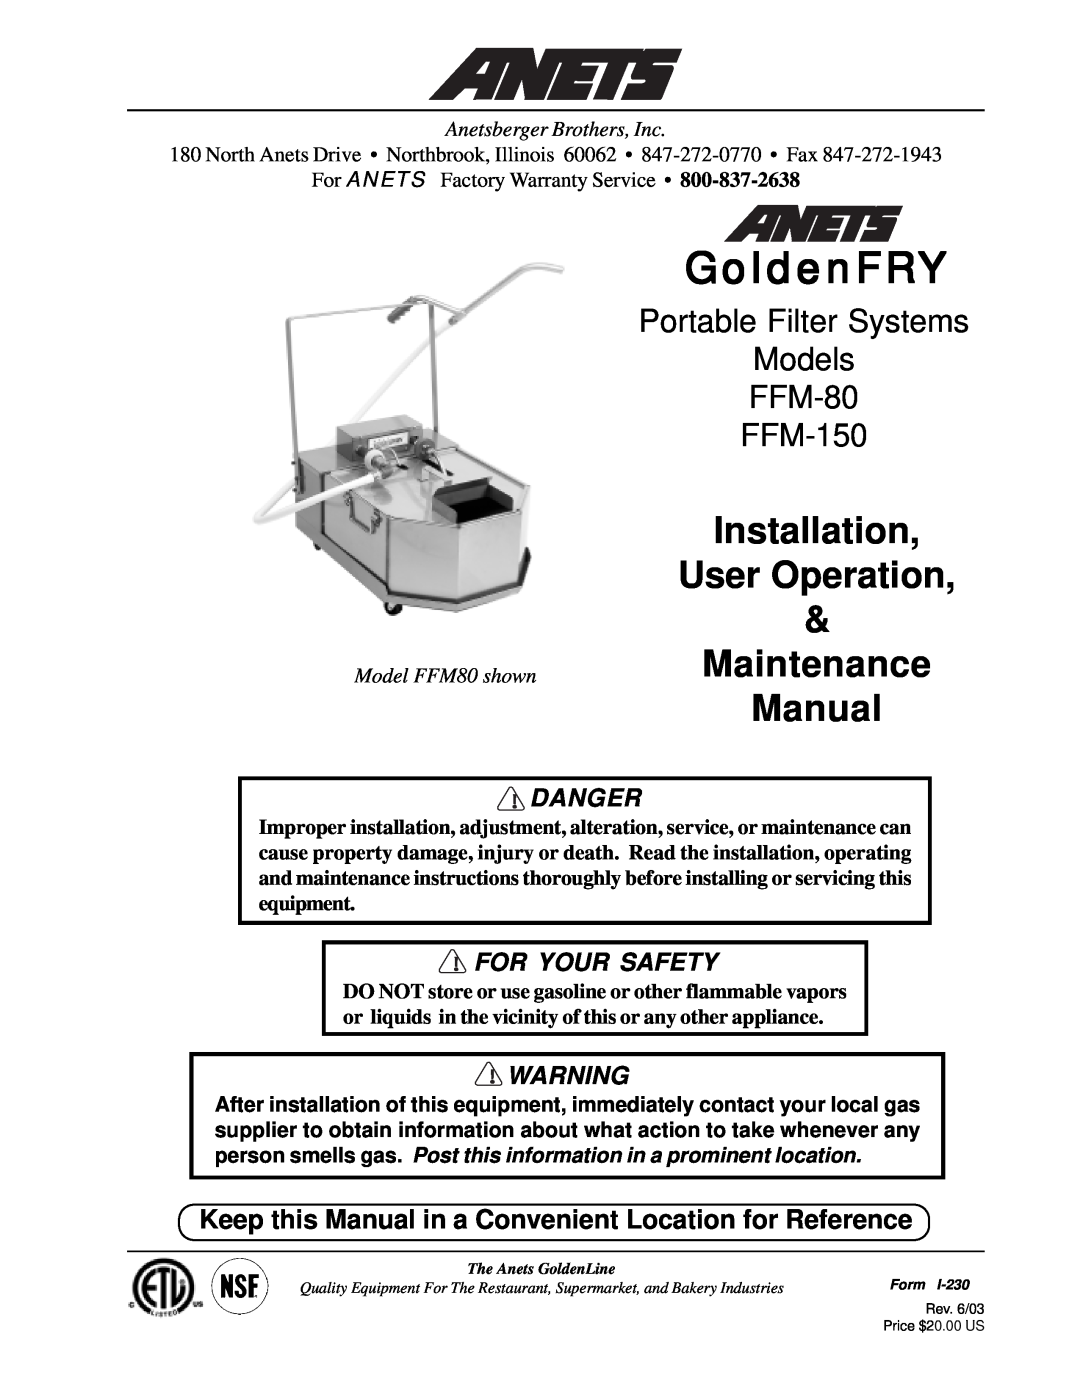 Anetsberger Brothers FFM-150 warranty Danger, For Your Safety, Anetsberger Brothers, Inc, Model FFM80 shown, GoldenFRY 